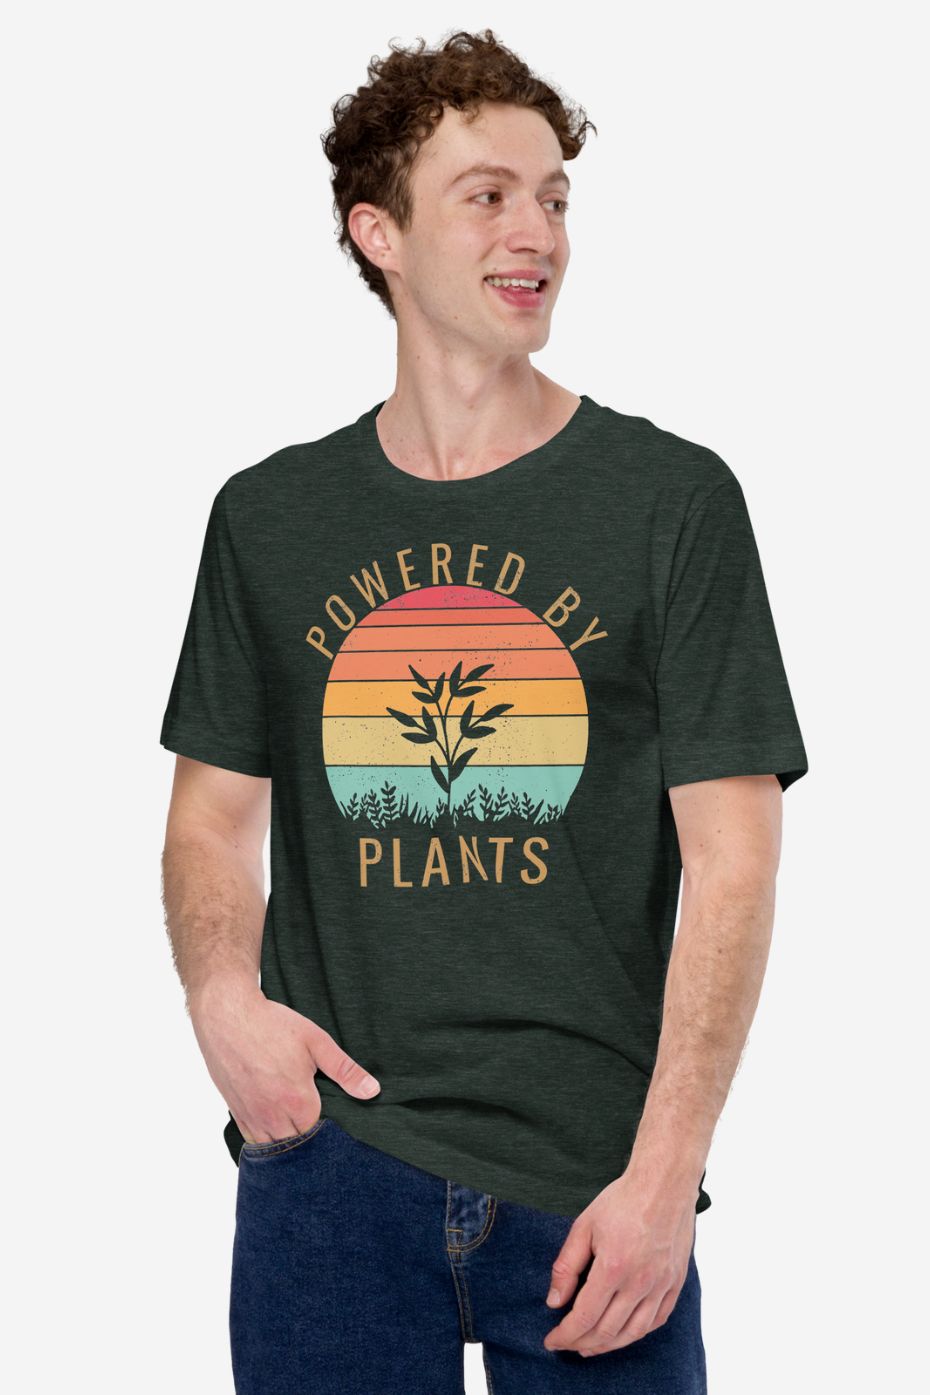 Powered By Plants - Unisex vegan t-shirt